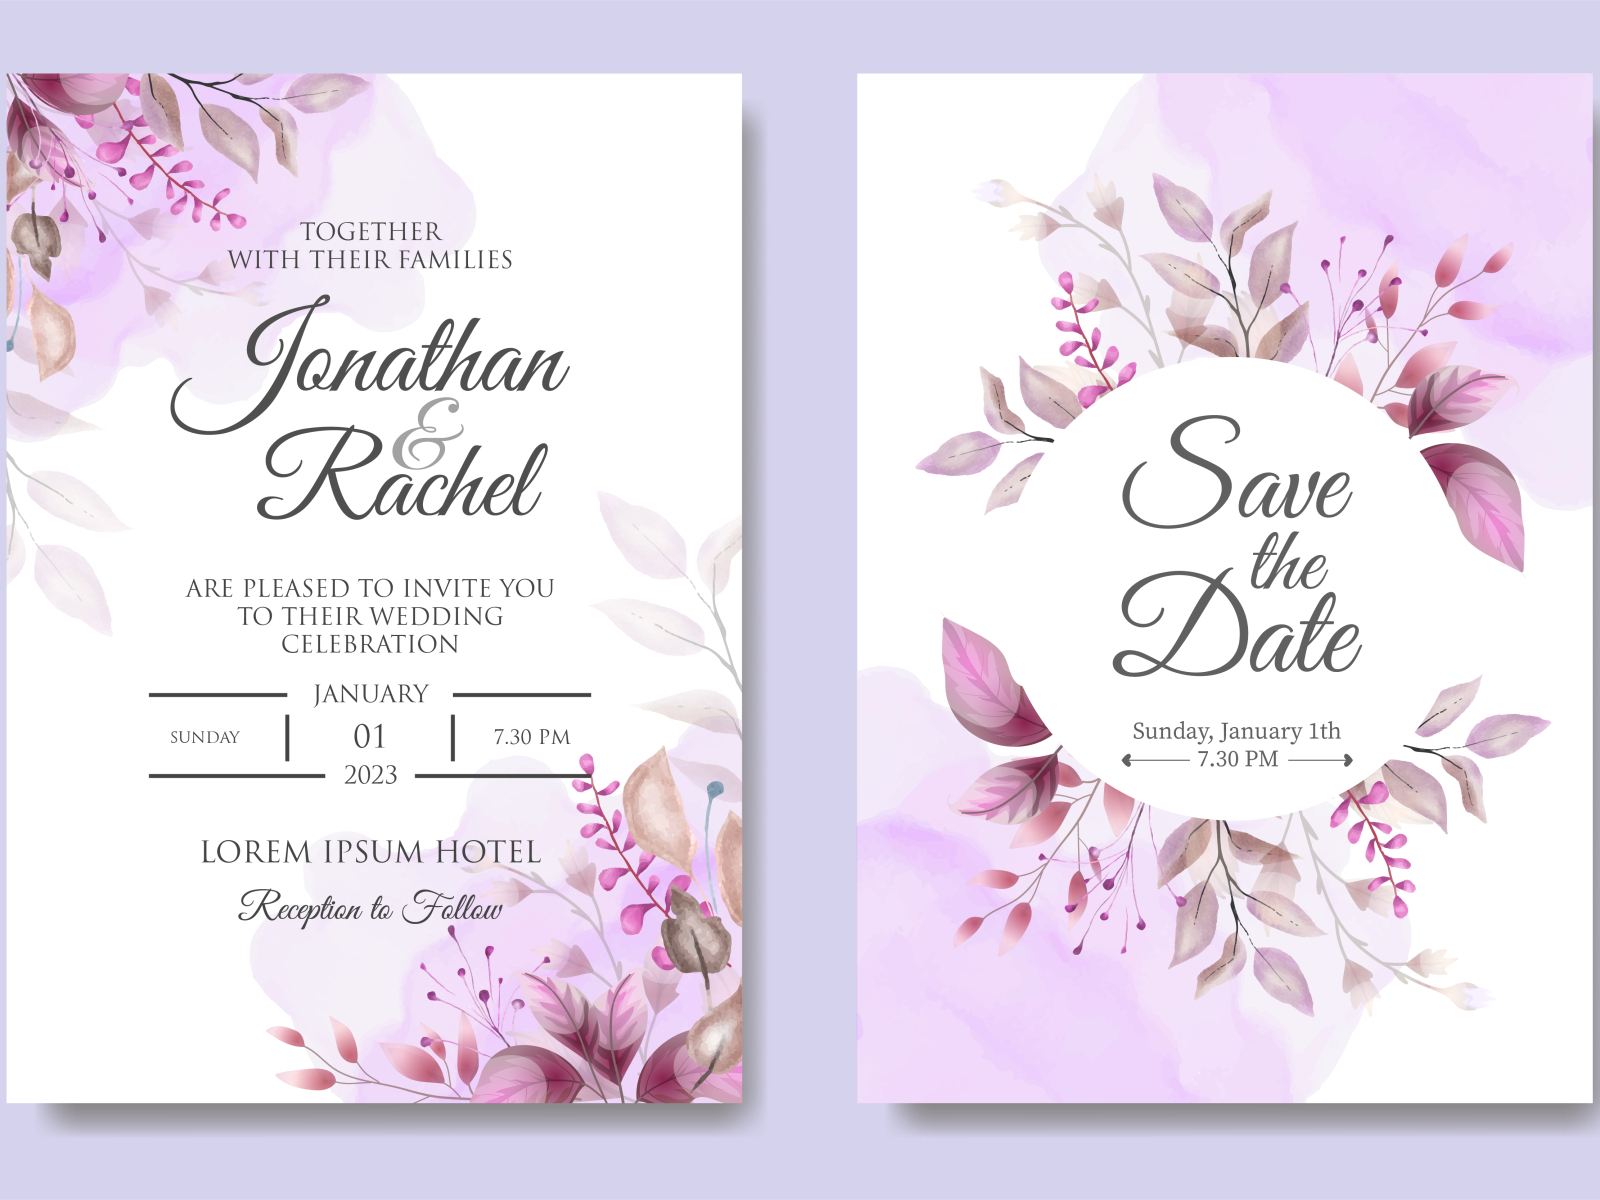 Elegant floral wedding invitation template in classic purple by Yekti Eka  on Dribbble